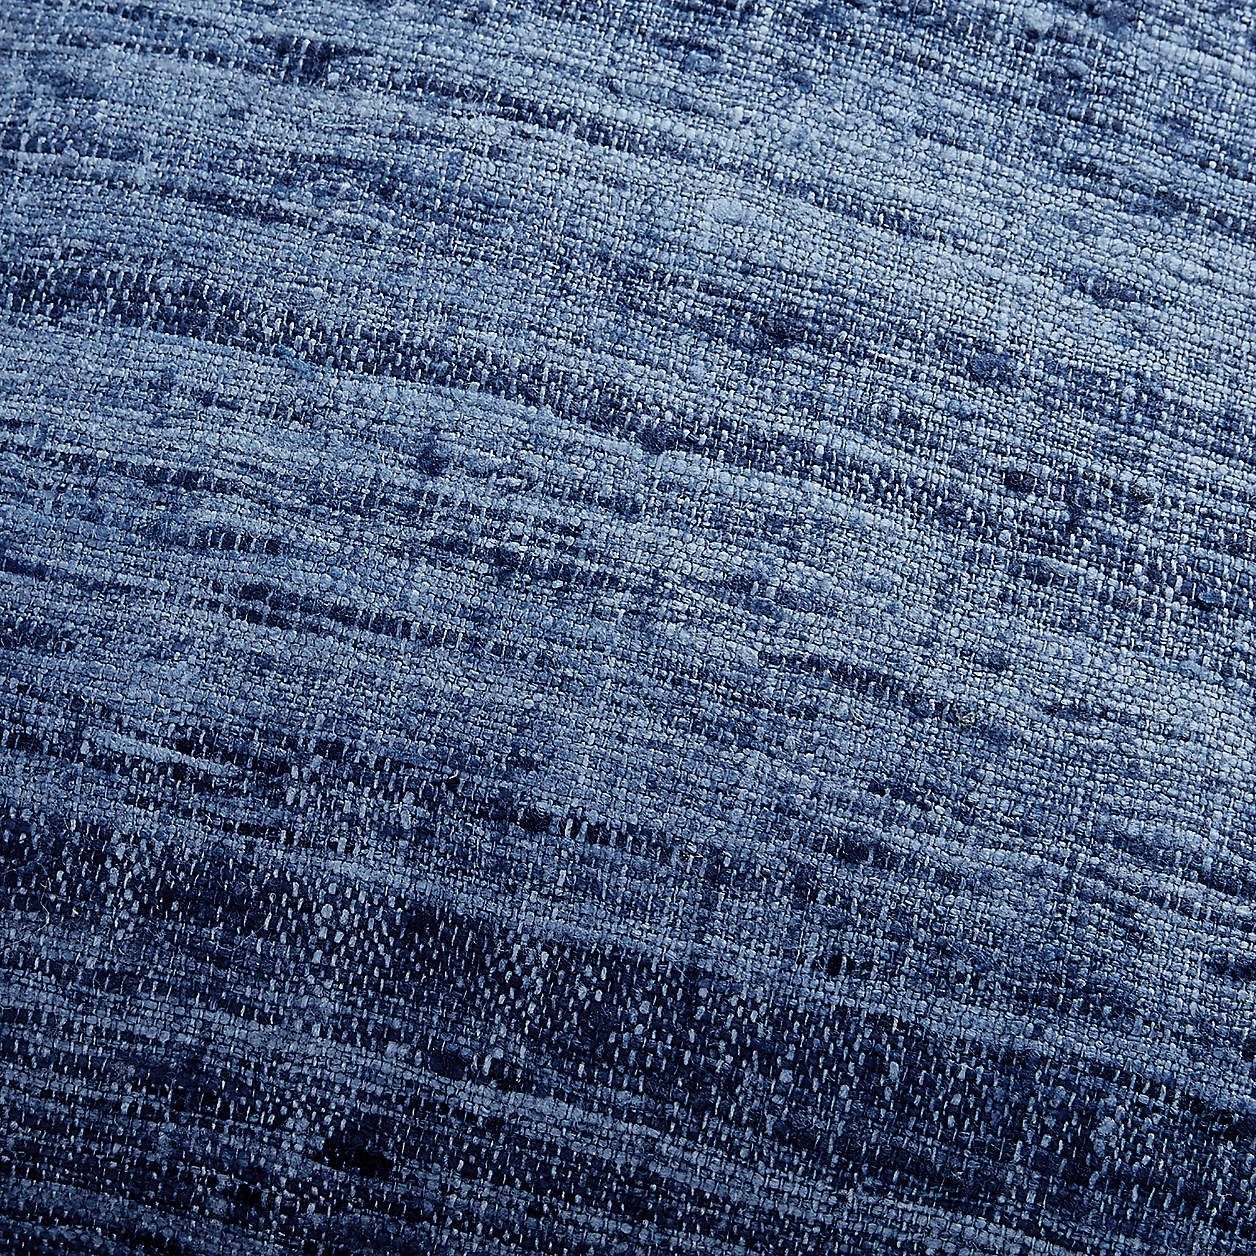 Blue 20"x20" Cotton Sari Silk Throw Pillow Cover - Image 1